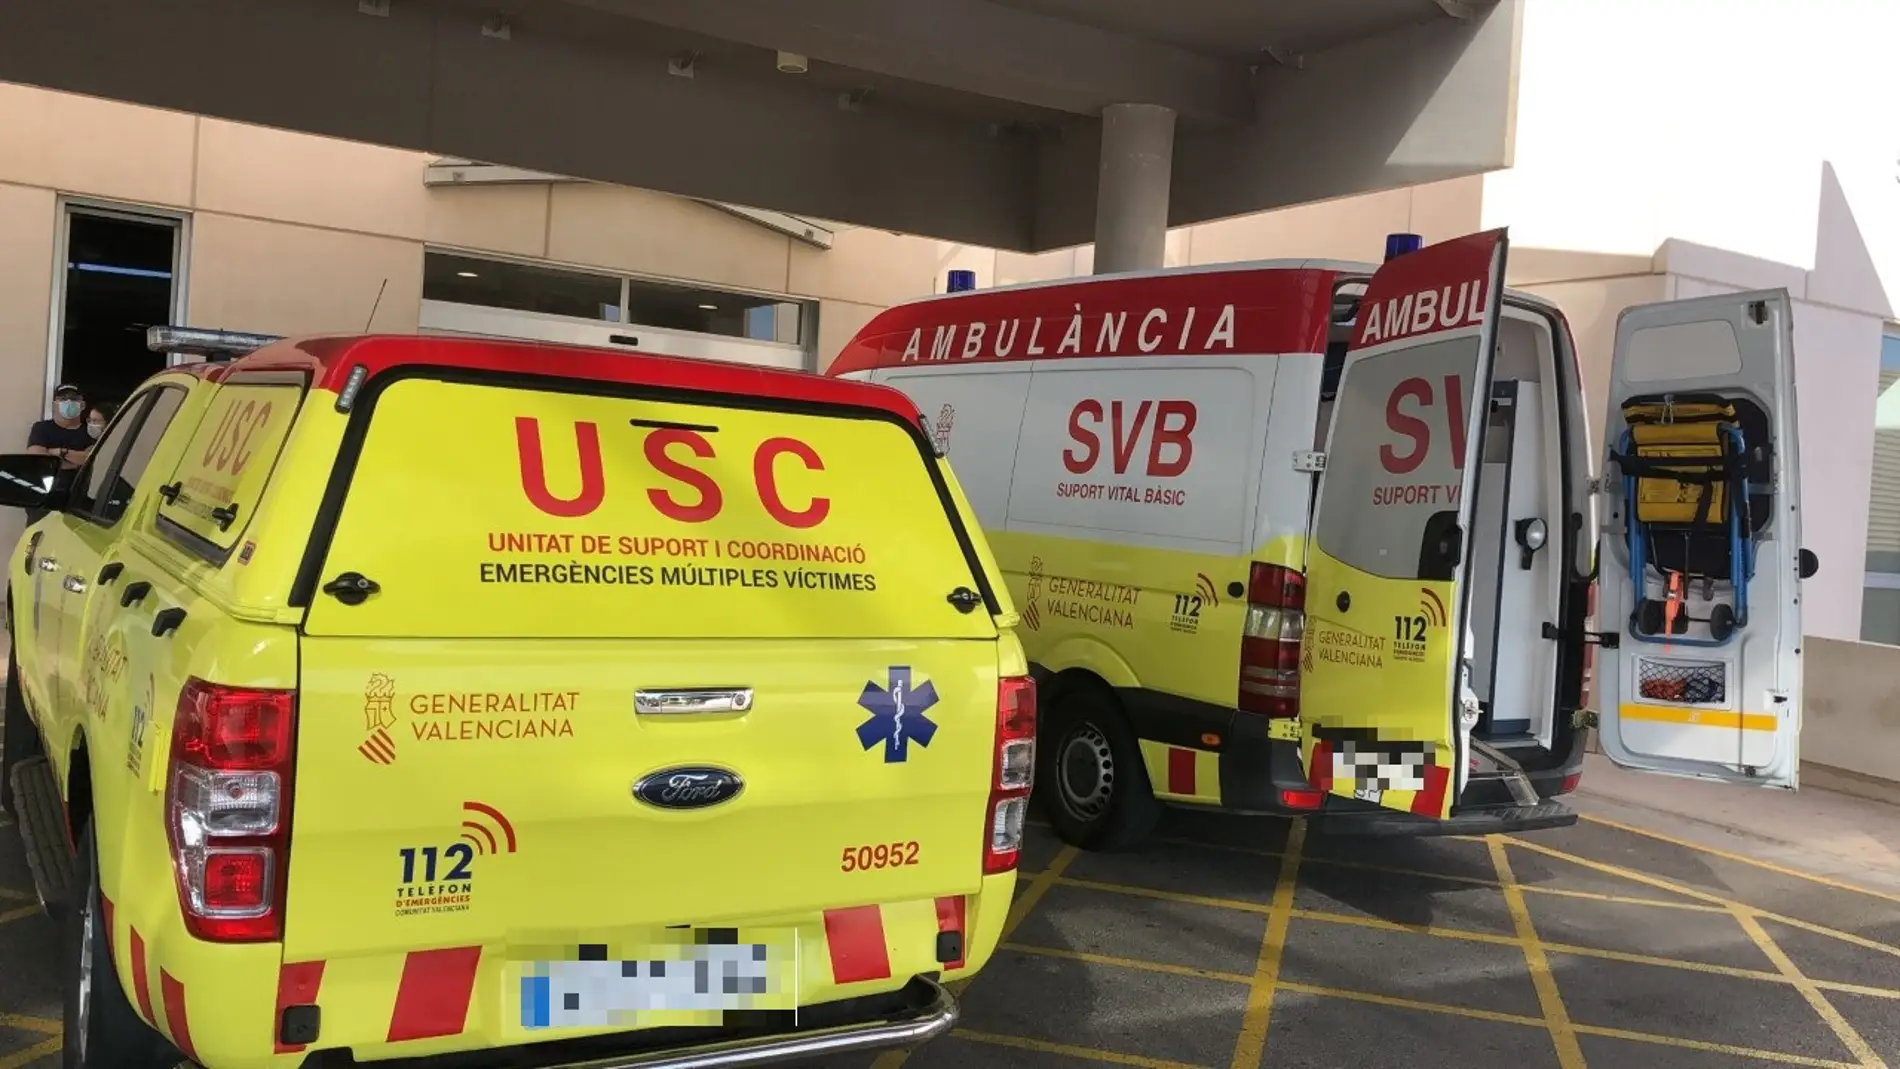 VIR y ambulancia de SVB en el Hospital del Vinalopó de Elche.